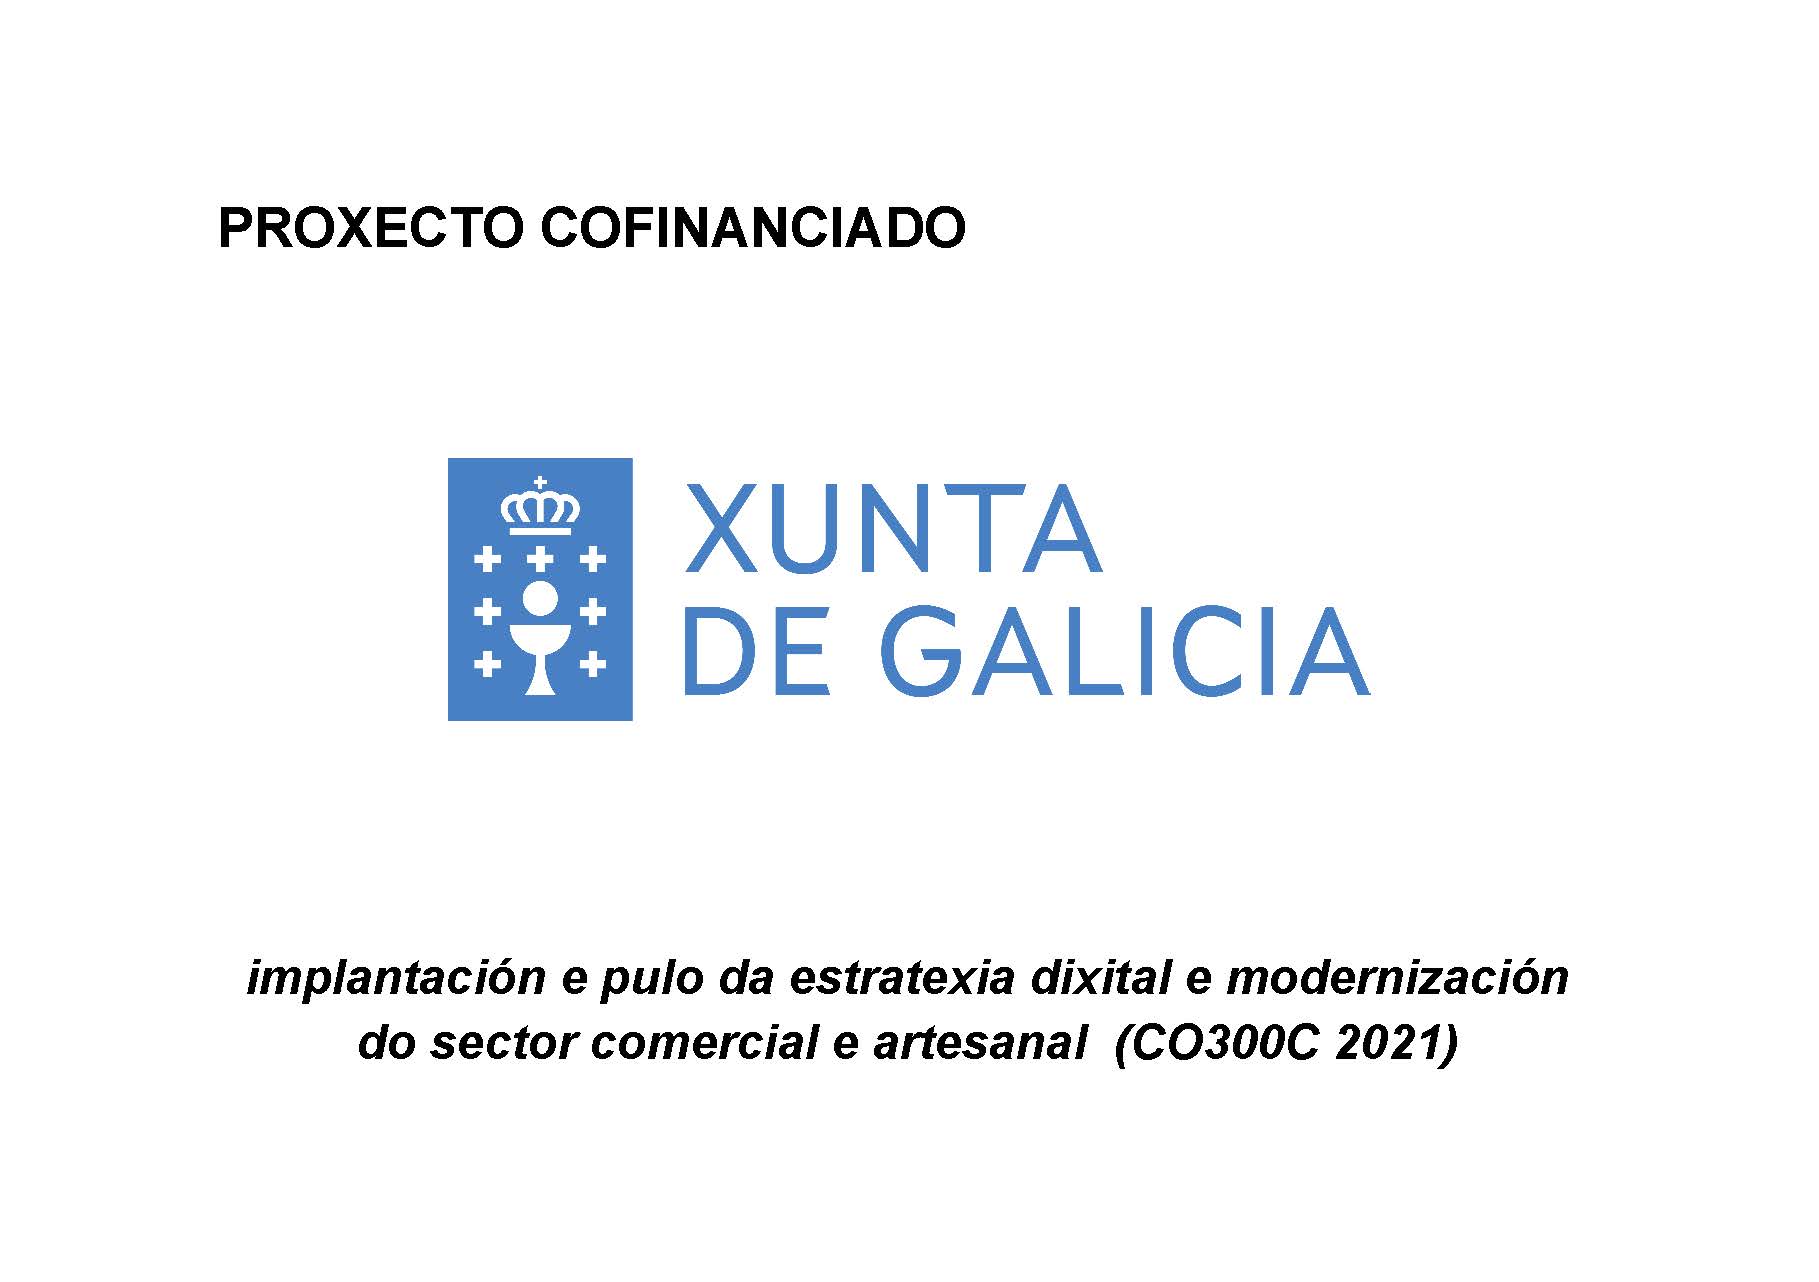 PROYECTO COFINANCIADO XUNTA DE GALICIA (CO300C 2021)